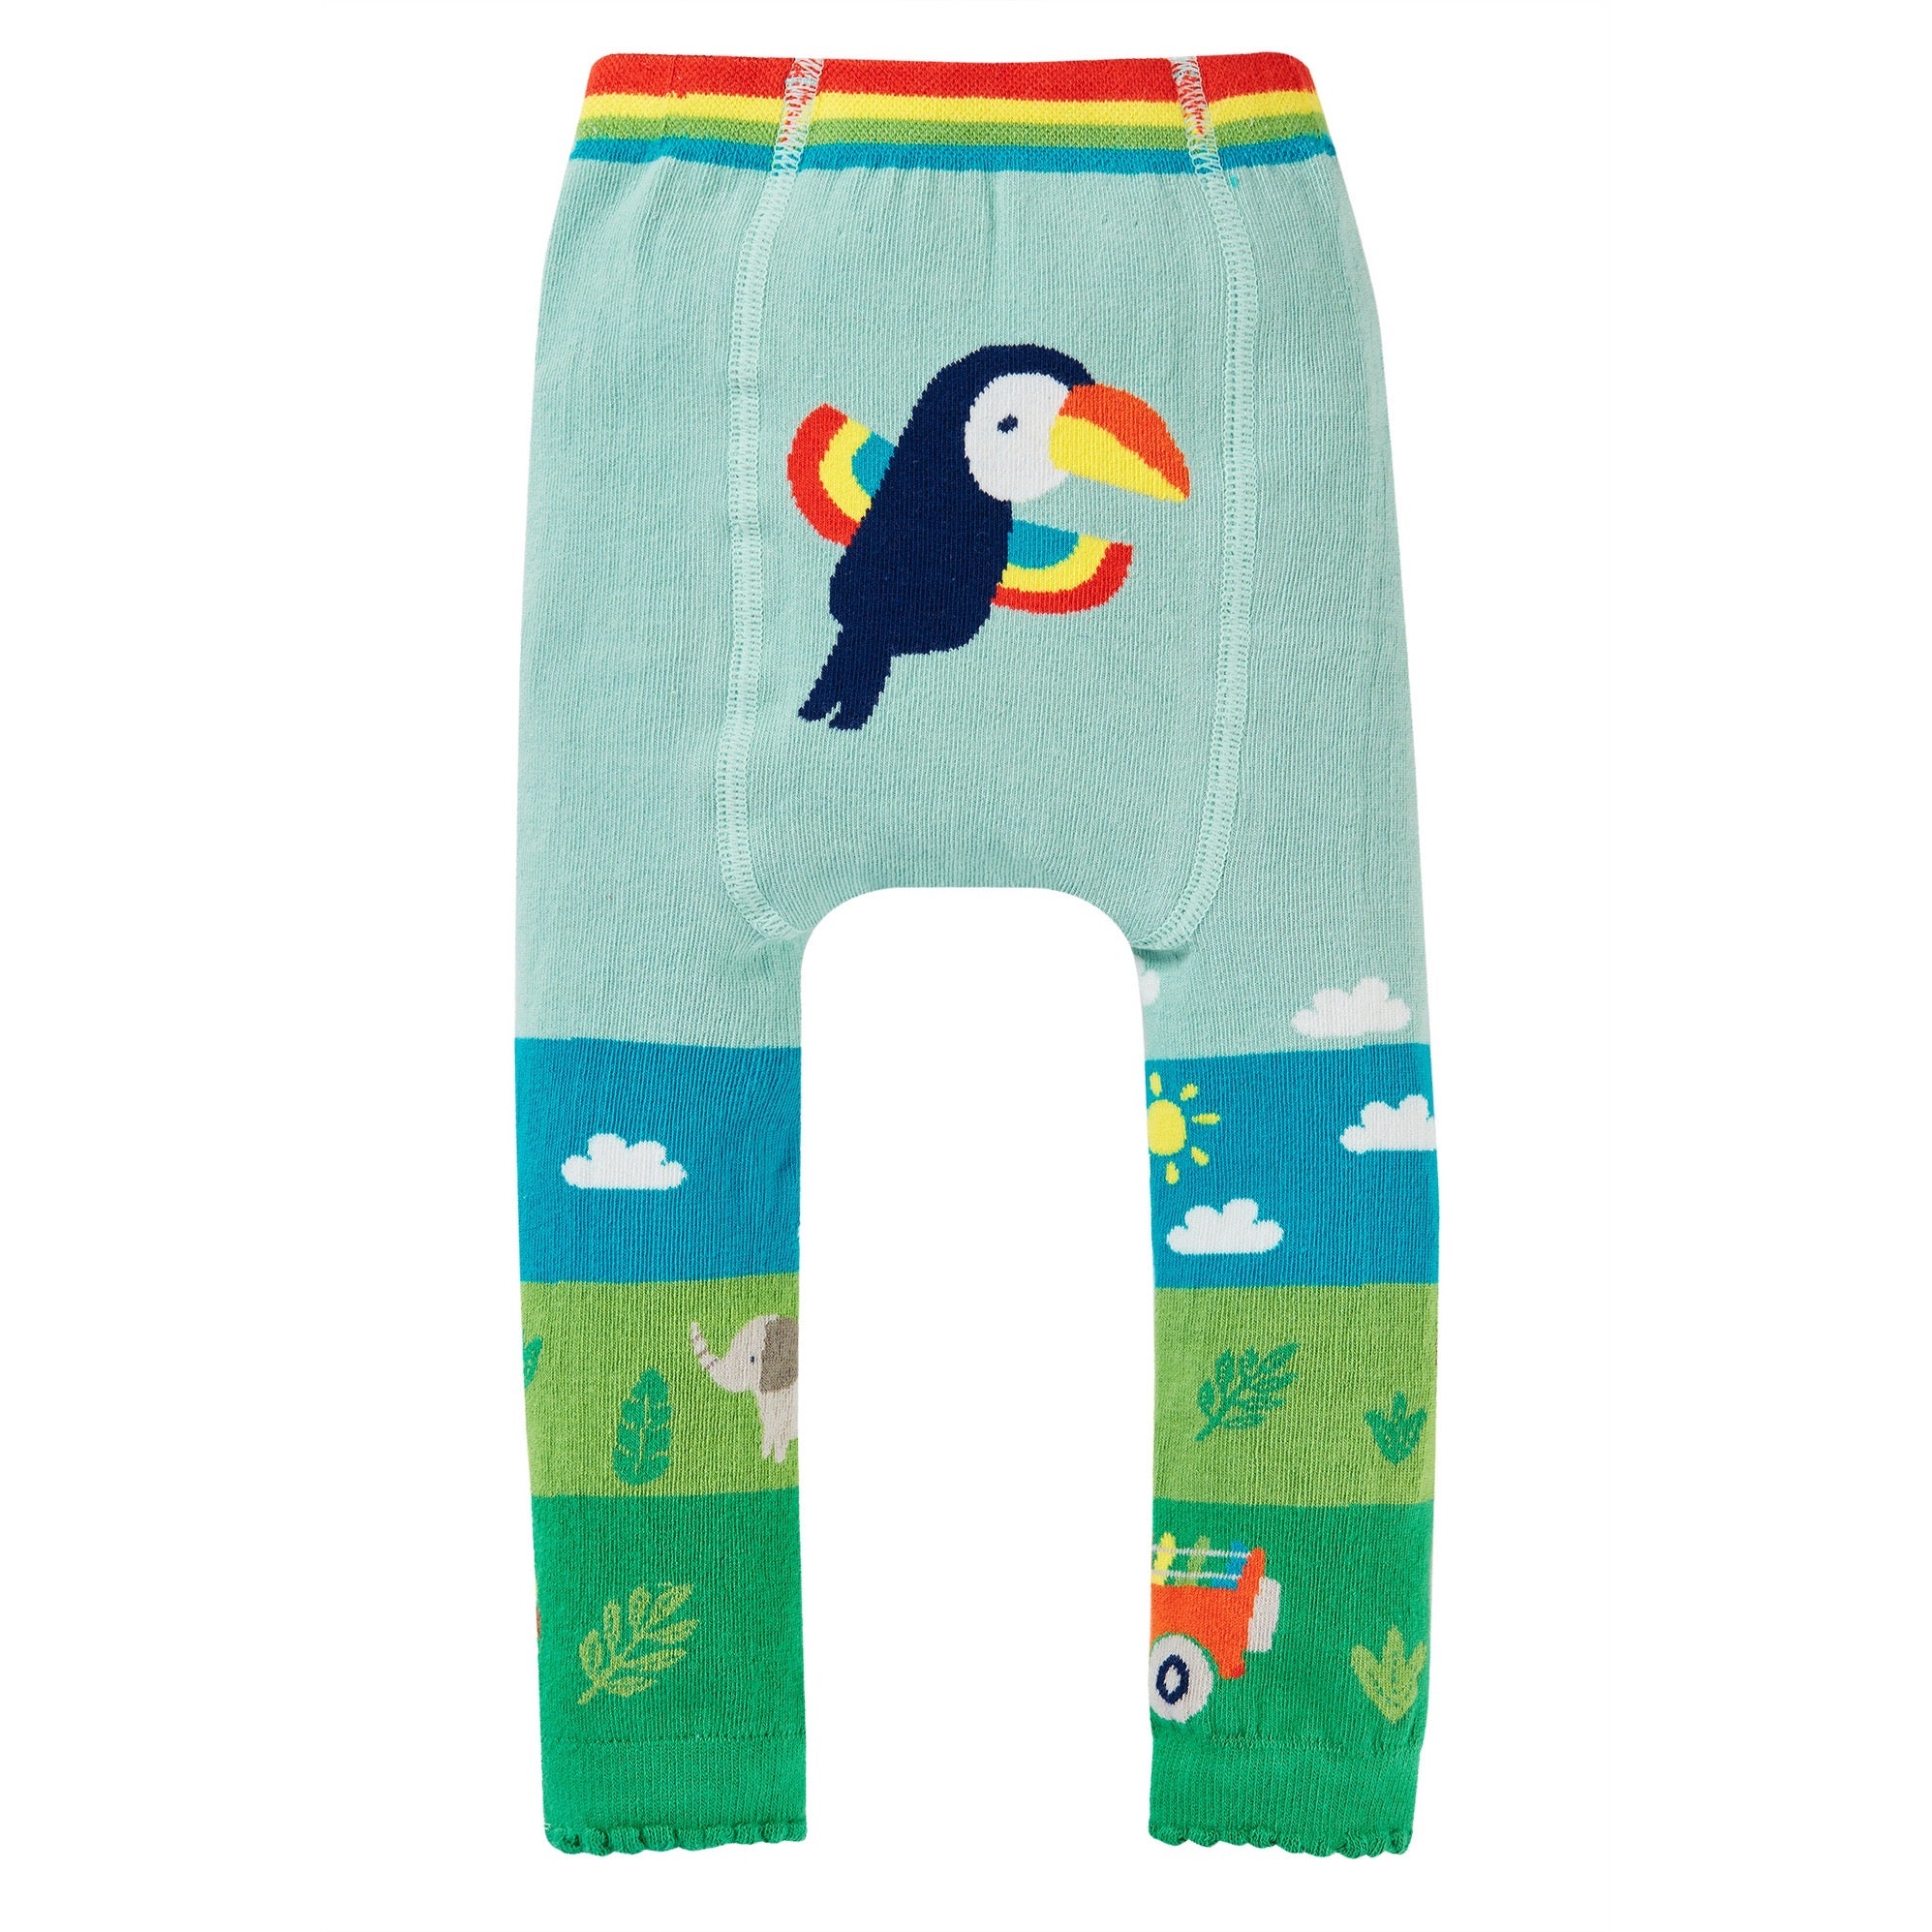 Frugi Infant Knitted Leggings Ll8c9 Toucan Clothing 0-6M / Aqua,6-12M / Aqua,1-2YRS / Aqua